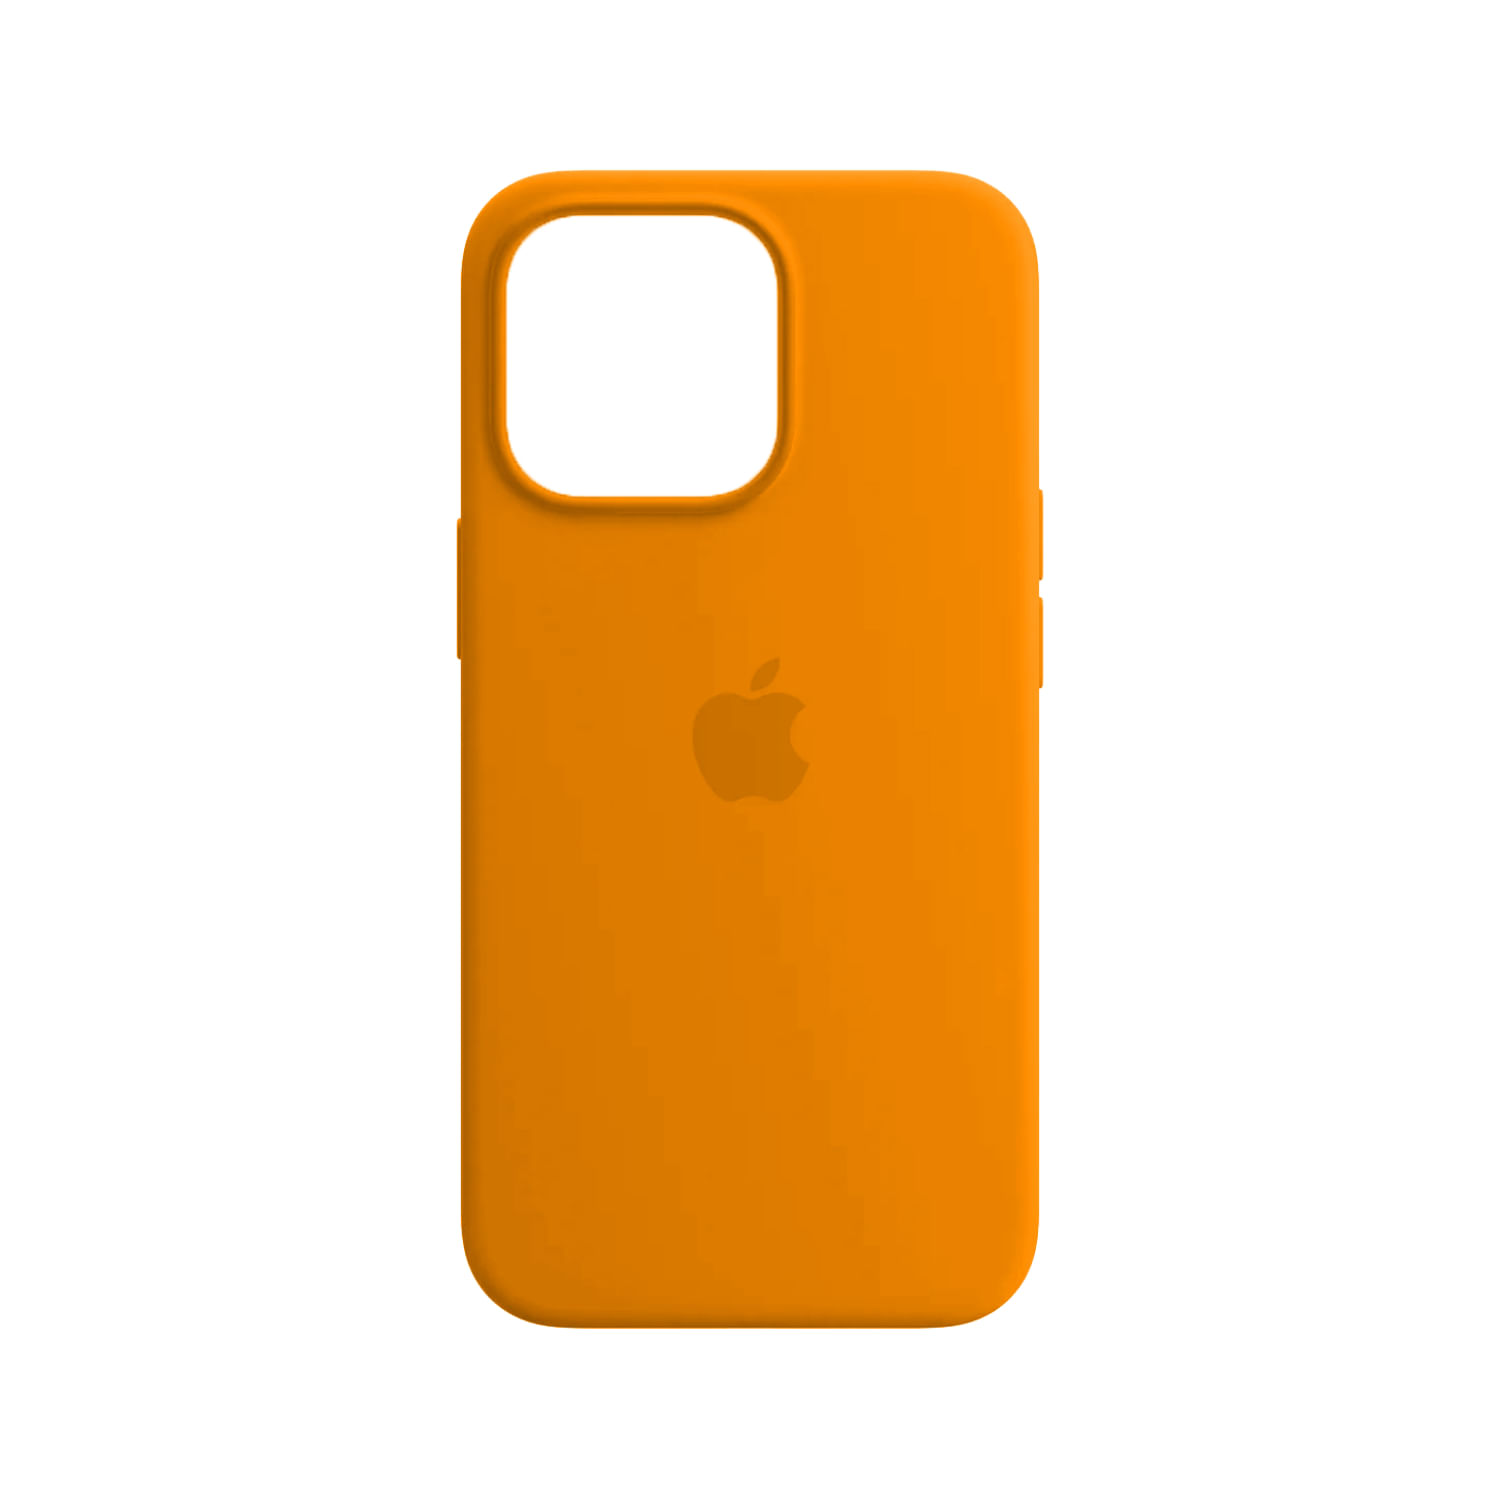 Case De Silicona Iphone 11 Pro Max Naranja